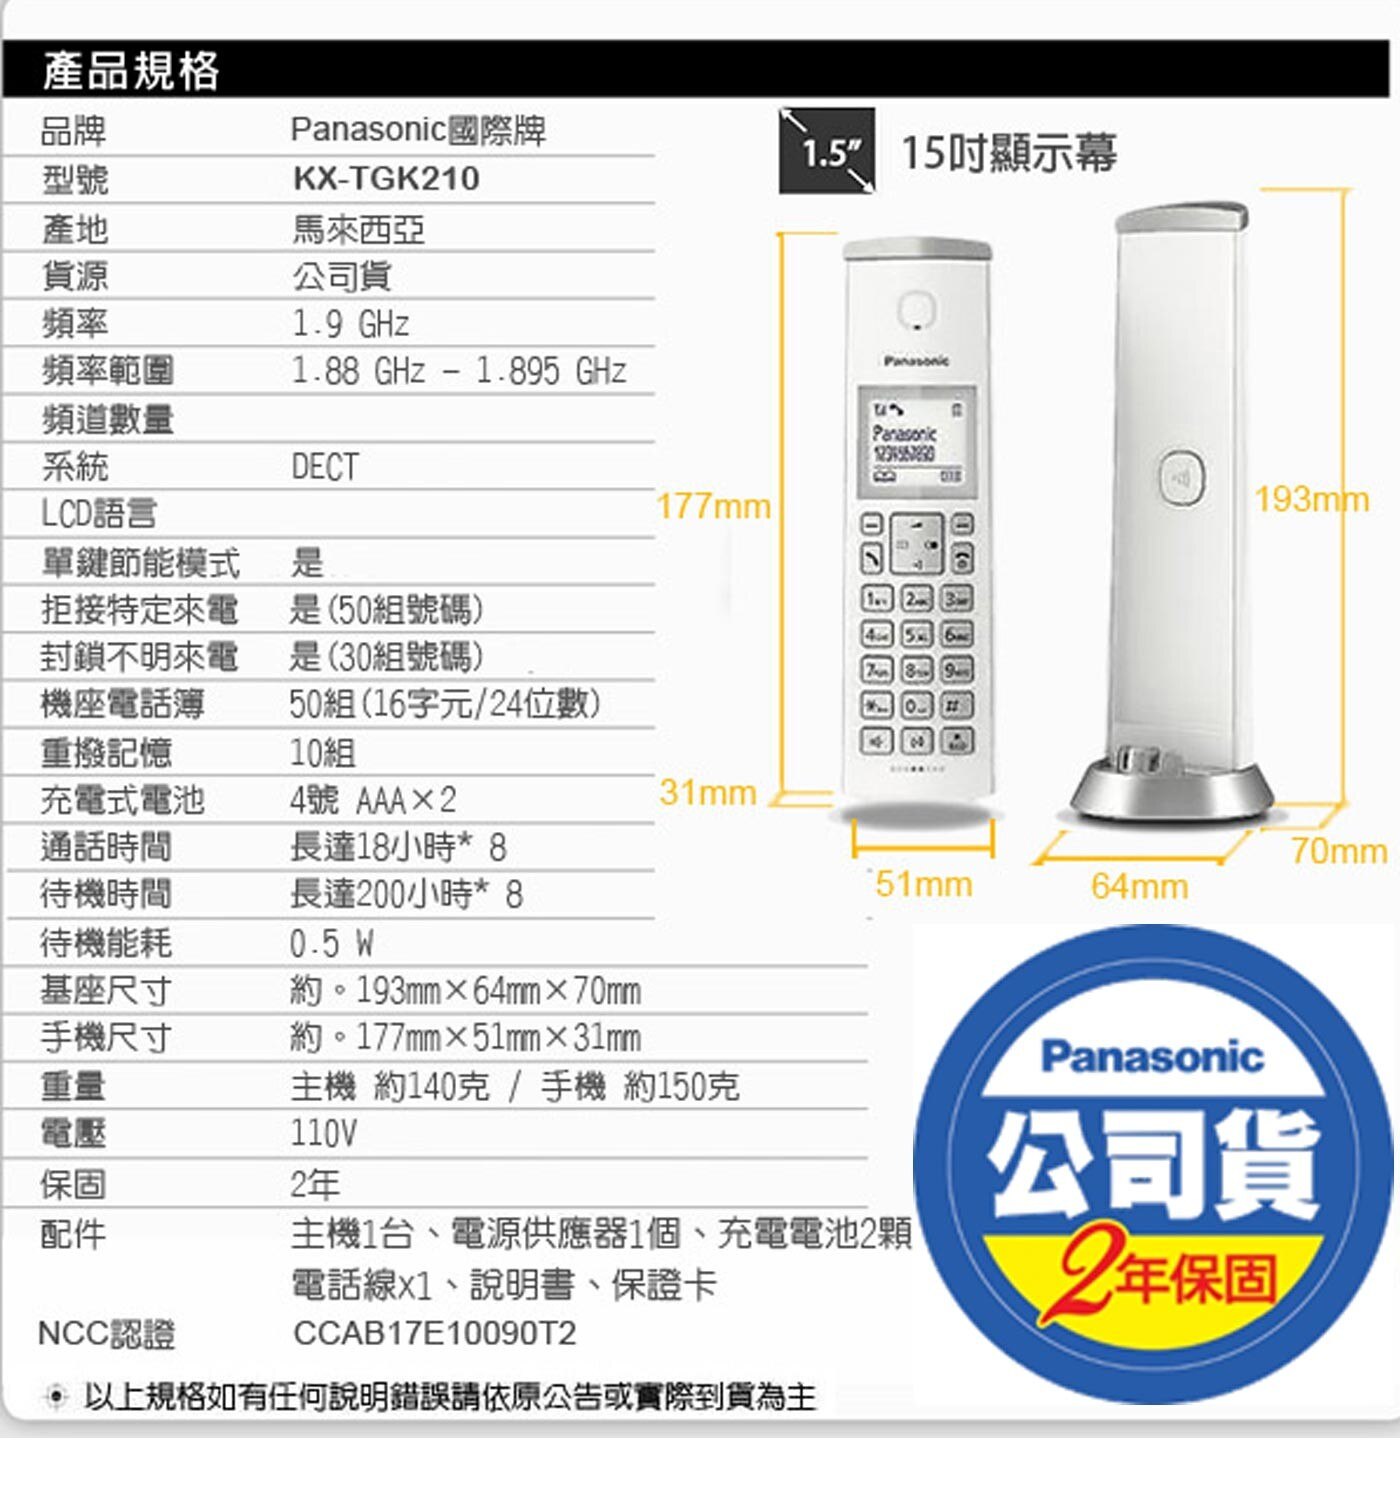 Panasonic 國際KX-TGK210 無線電話白，通話18hr、待機時間200hr，輕巧設計不占空間的筒狀外型，多子機擴充功能，中文輸入顯示。